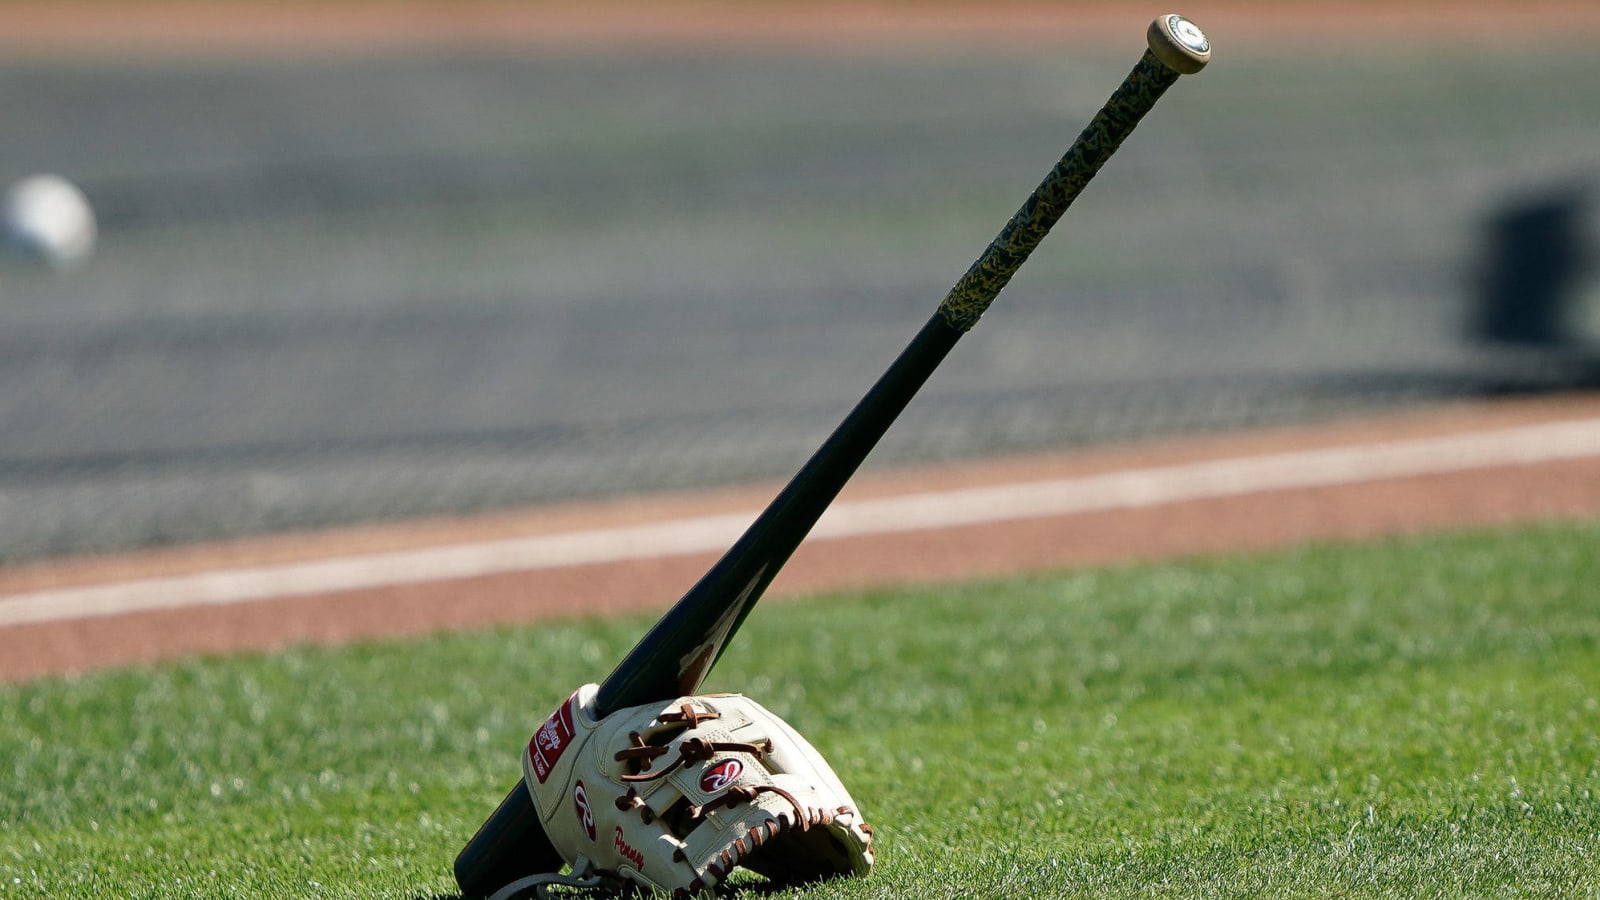 Watch: Astros prospect Luis Santana unleashes insane bat flip